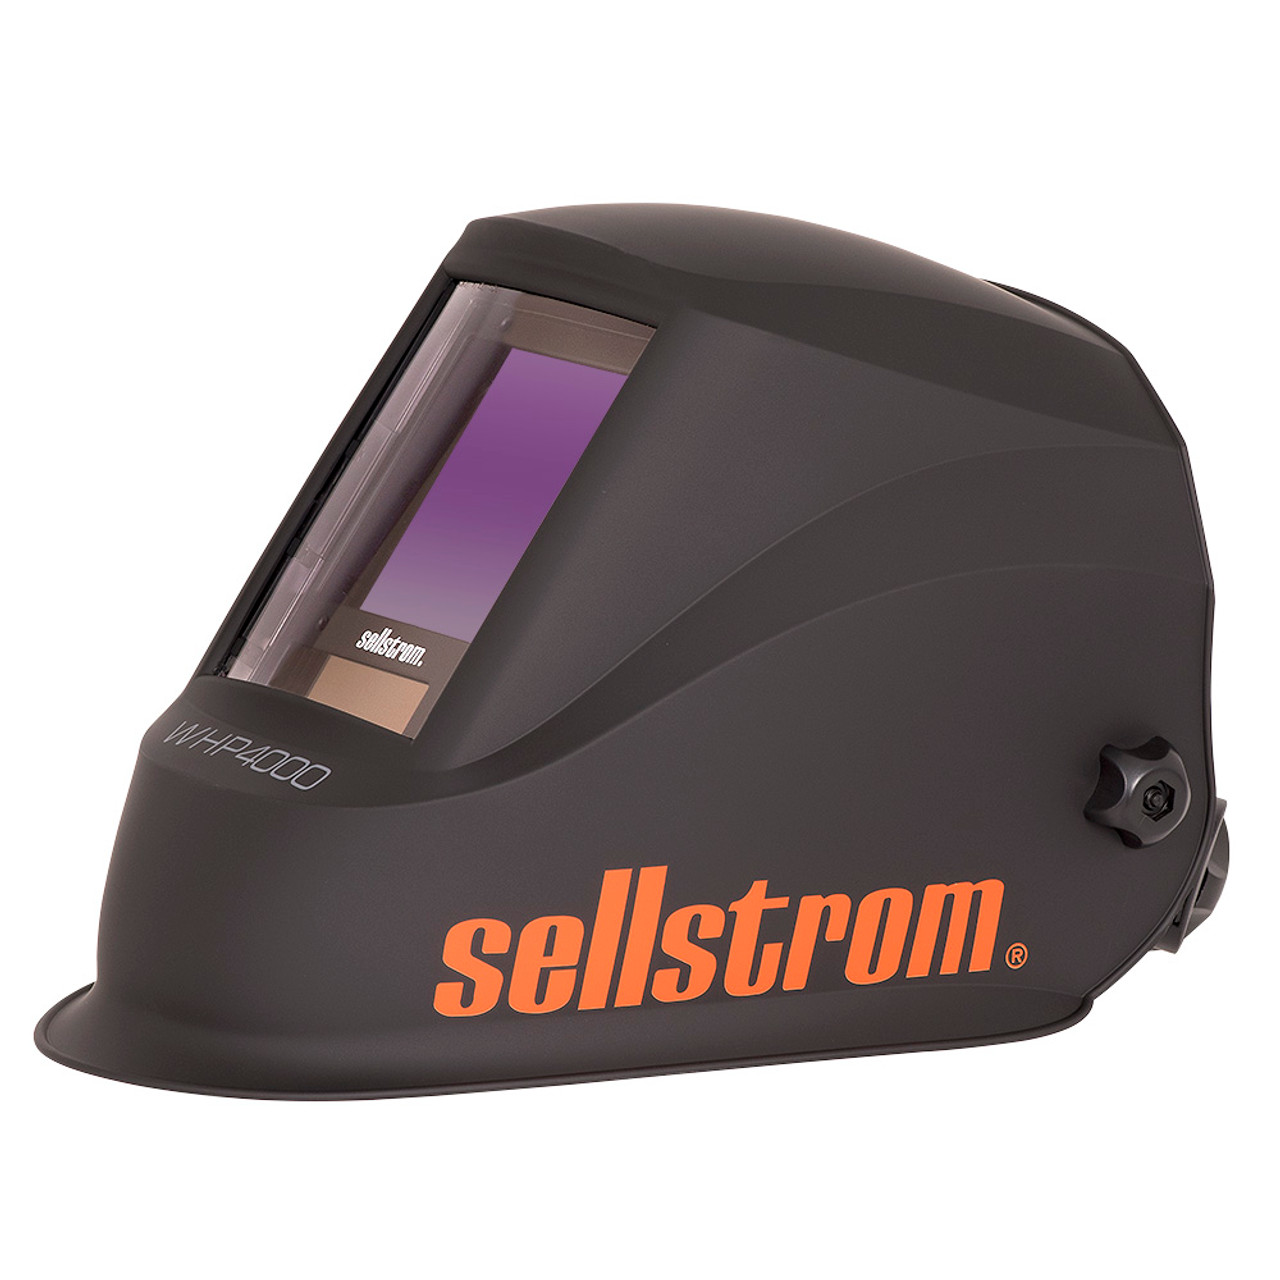 Sellstrom® Premium Series Variable Shade 5/9 ~ 13 Auto Darkening Welding Helmet w/Blue Lens Technology  S26400